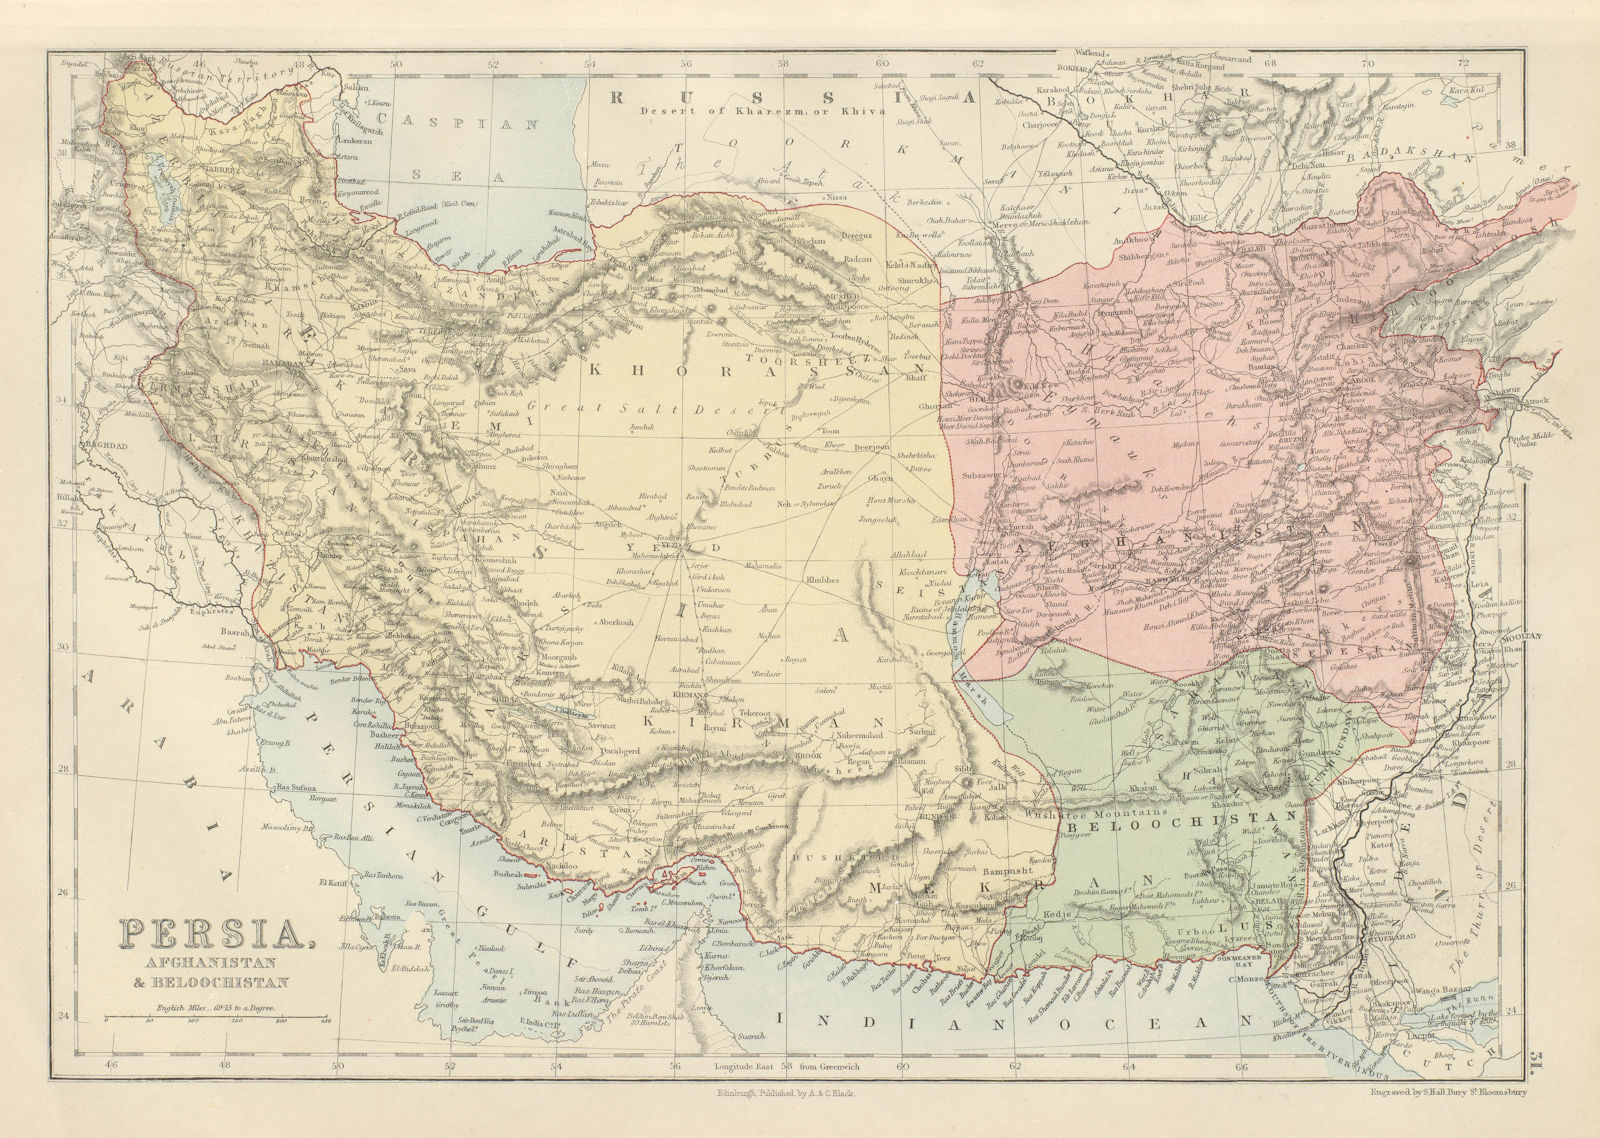 Persia, Afghanistan & Beloochistan. Debai (Dubai) & Sharja. BARTHOLOMEW 1882 map